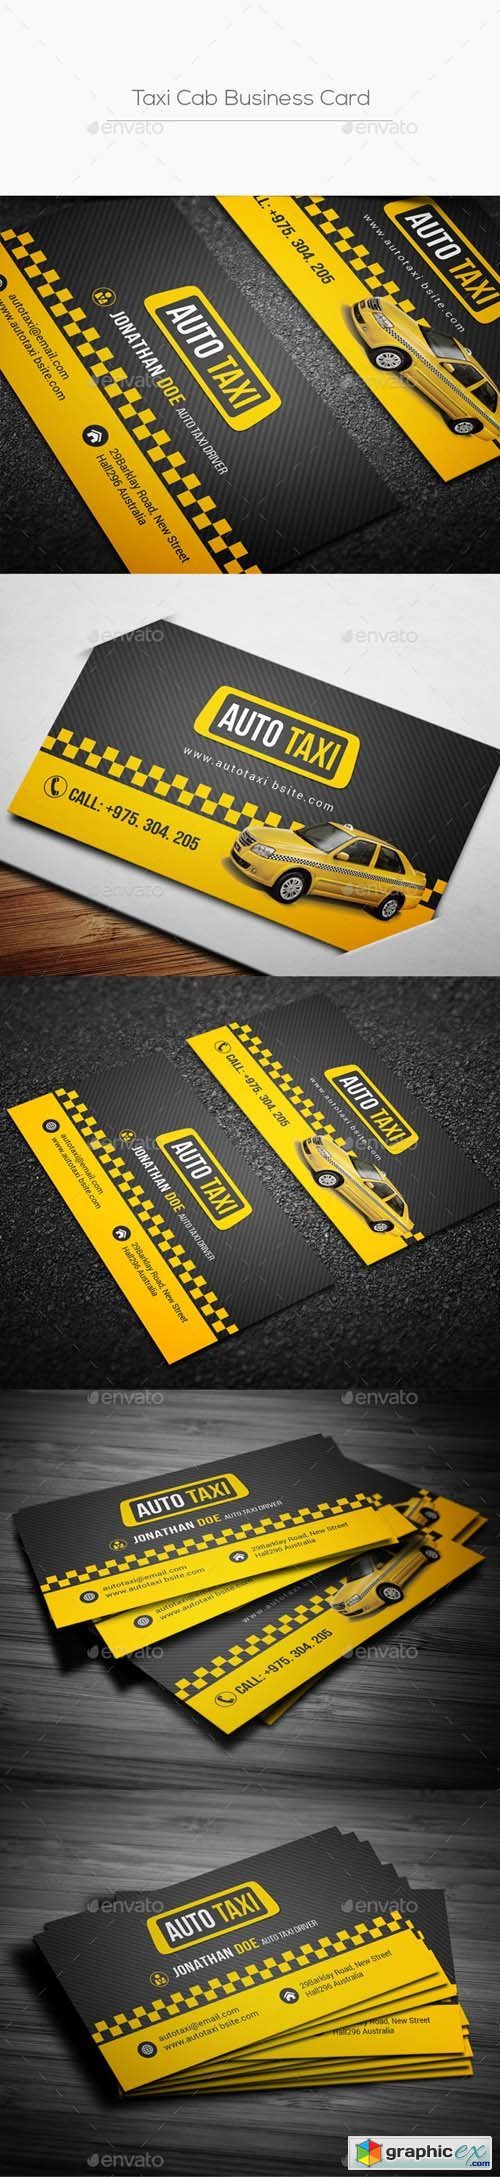 Taxi Cab Business Card